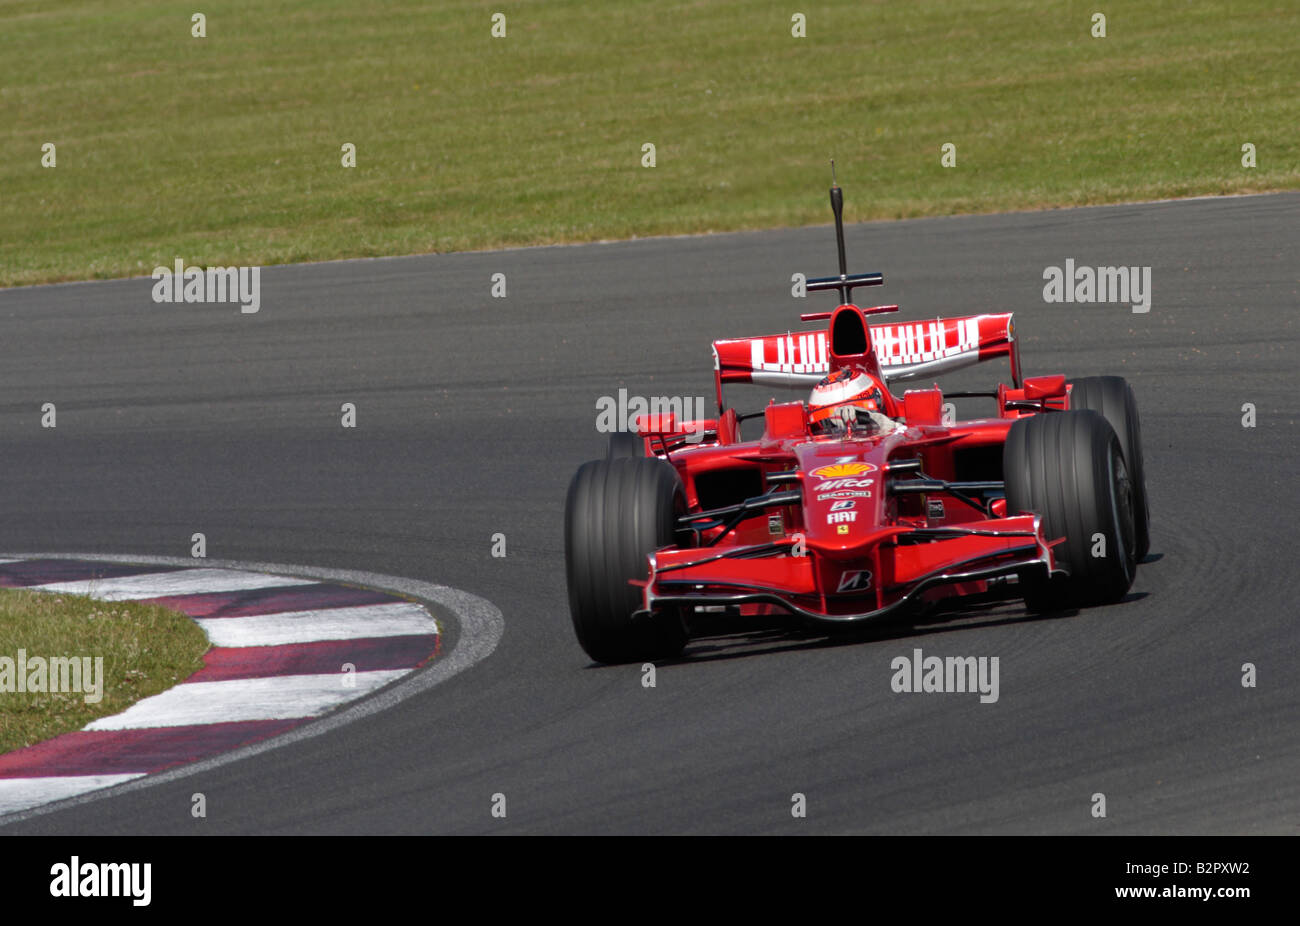 Kimi Räikkönen in the Scuderia Ferrari F2008 F1 racing car around Loughfield, Silverstone UK Stock Photo